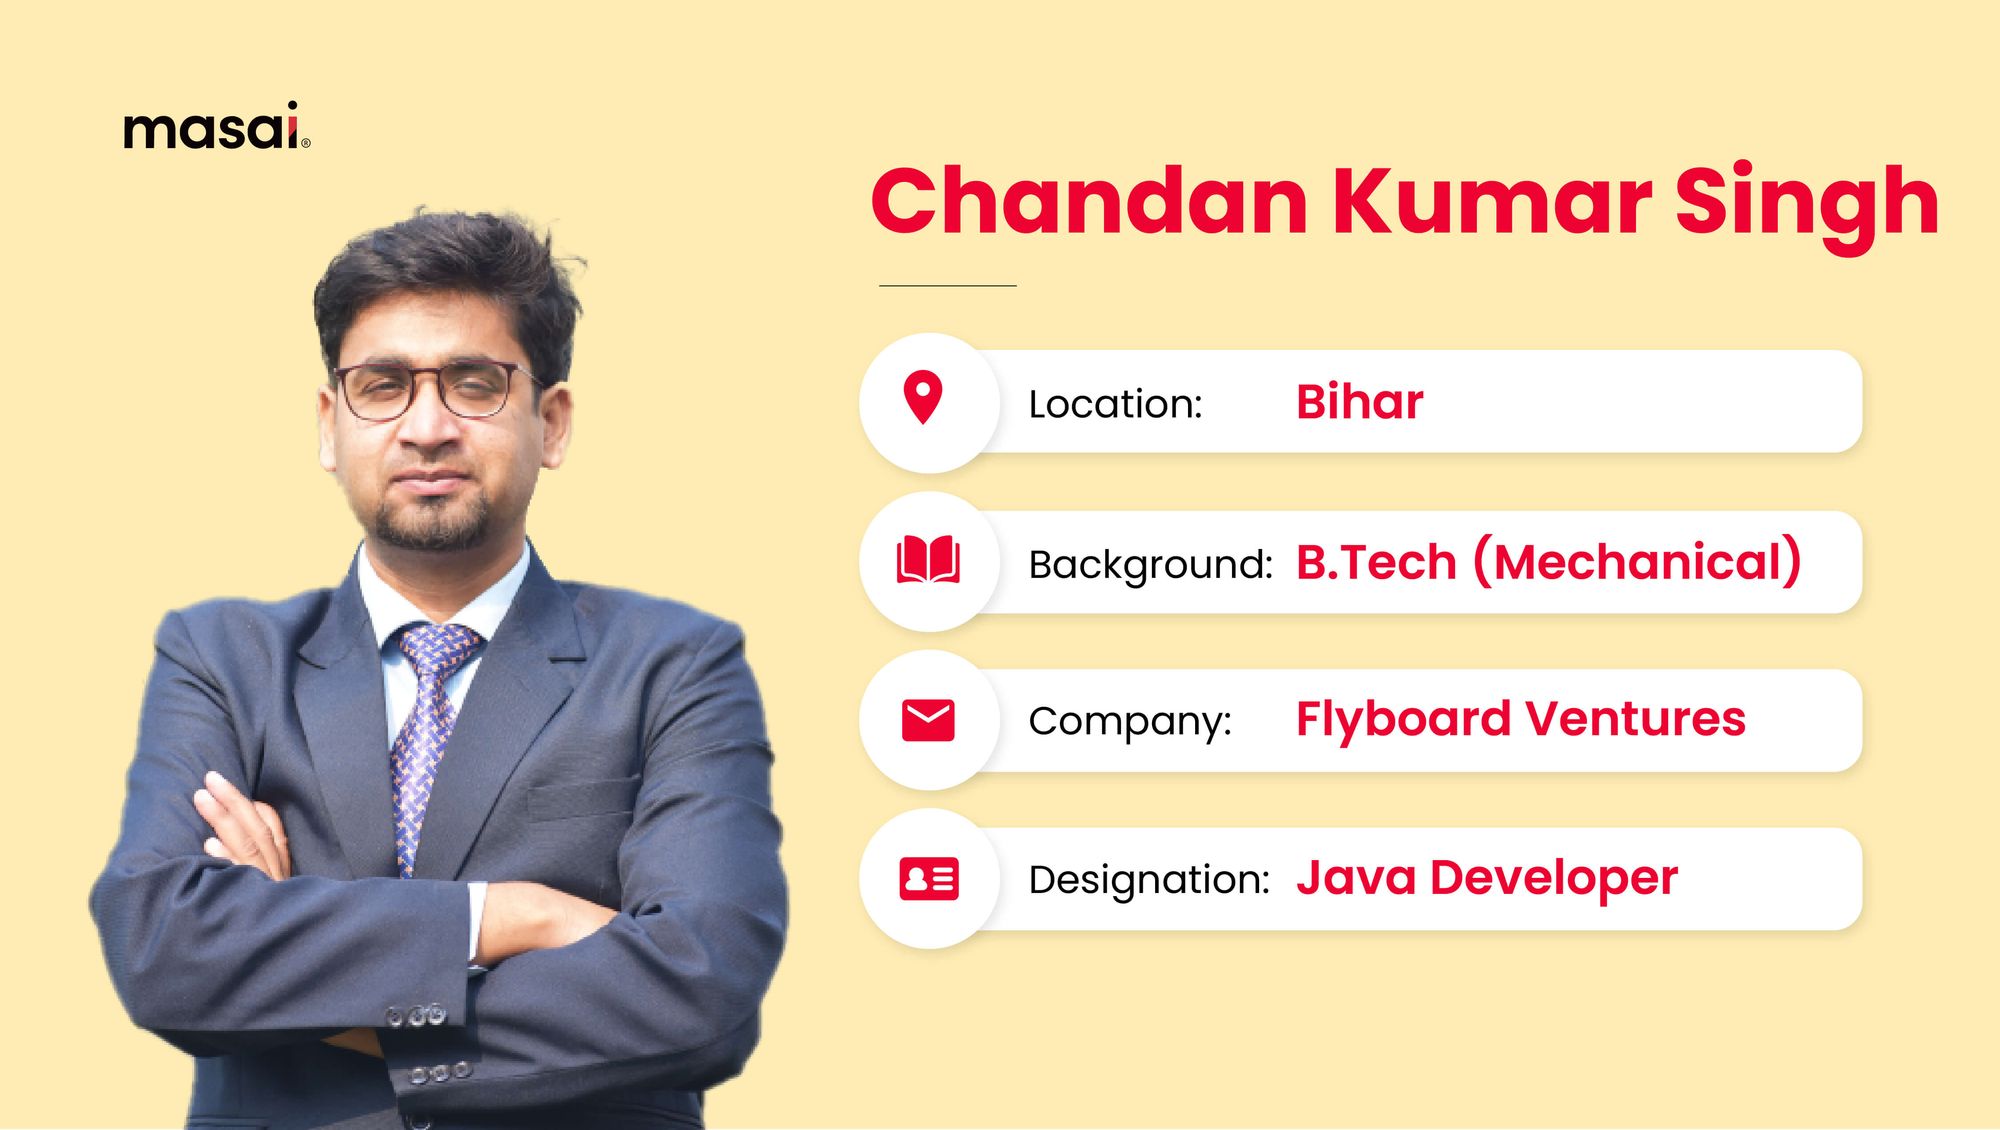 Chandan Kumar Singh - A Masai graduate now working as Java Developer at Flyboard Ventures